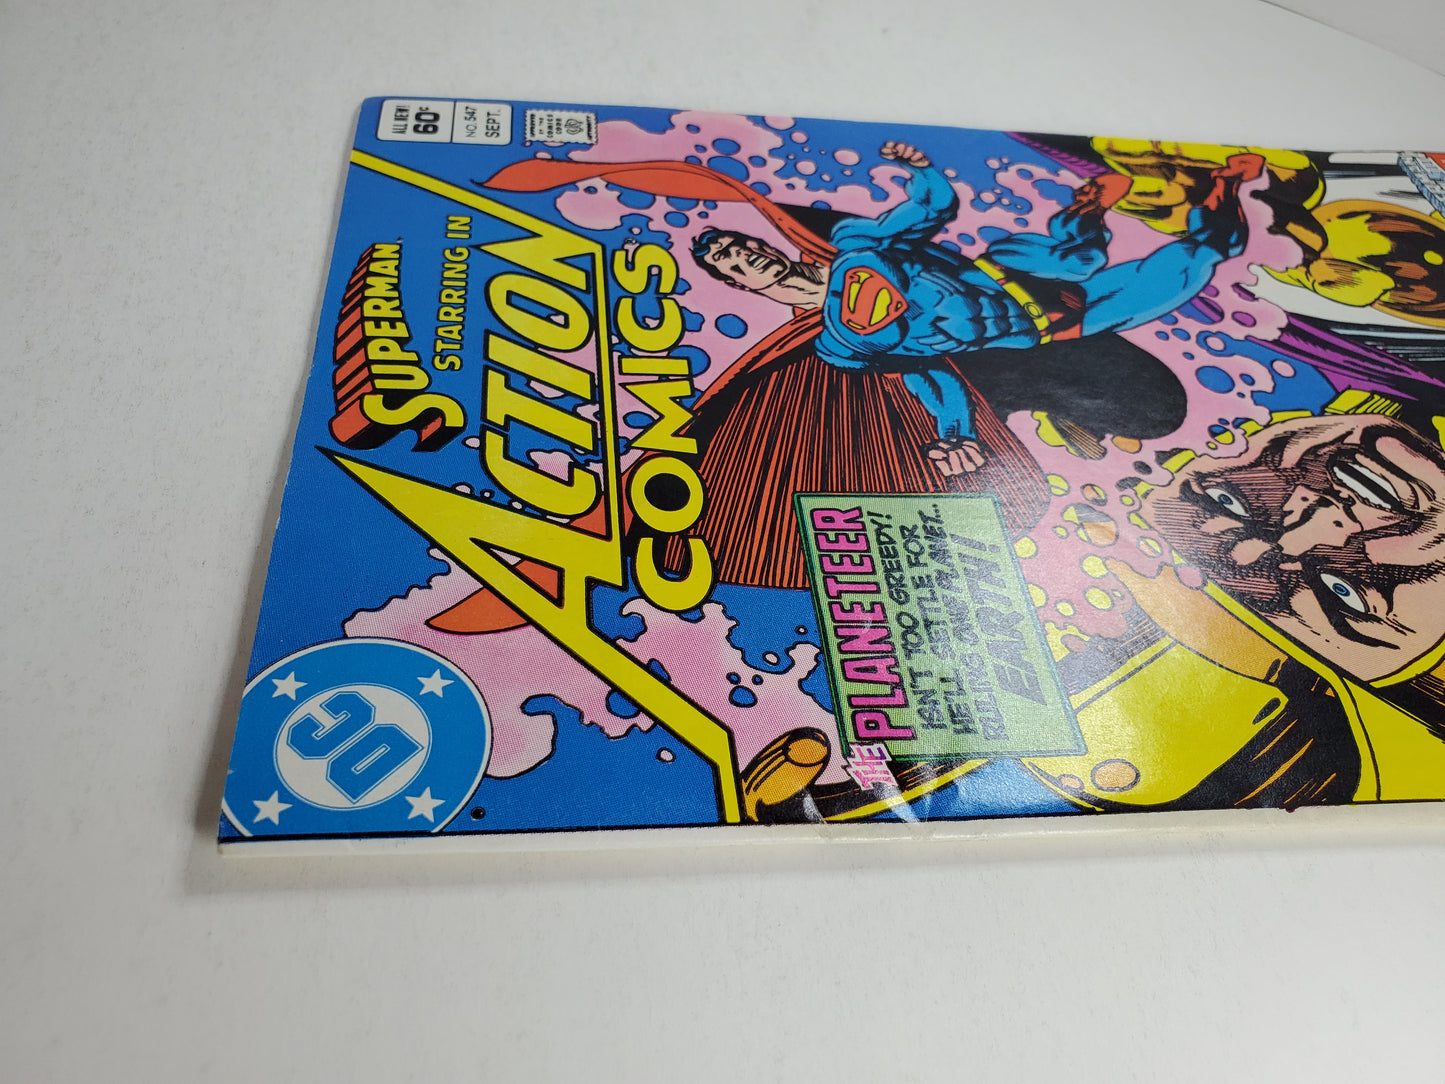 DC Action Comics Vol 1 #547 Newsstand